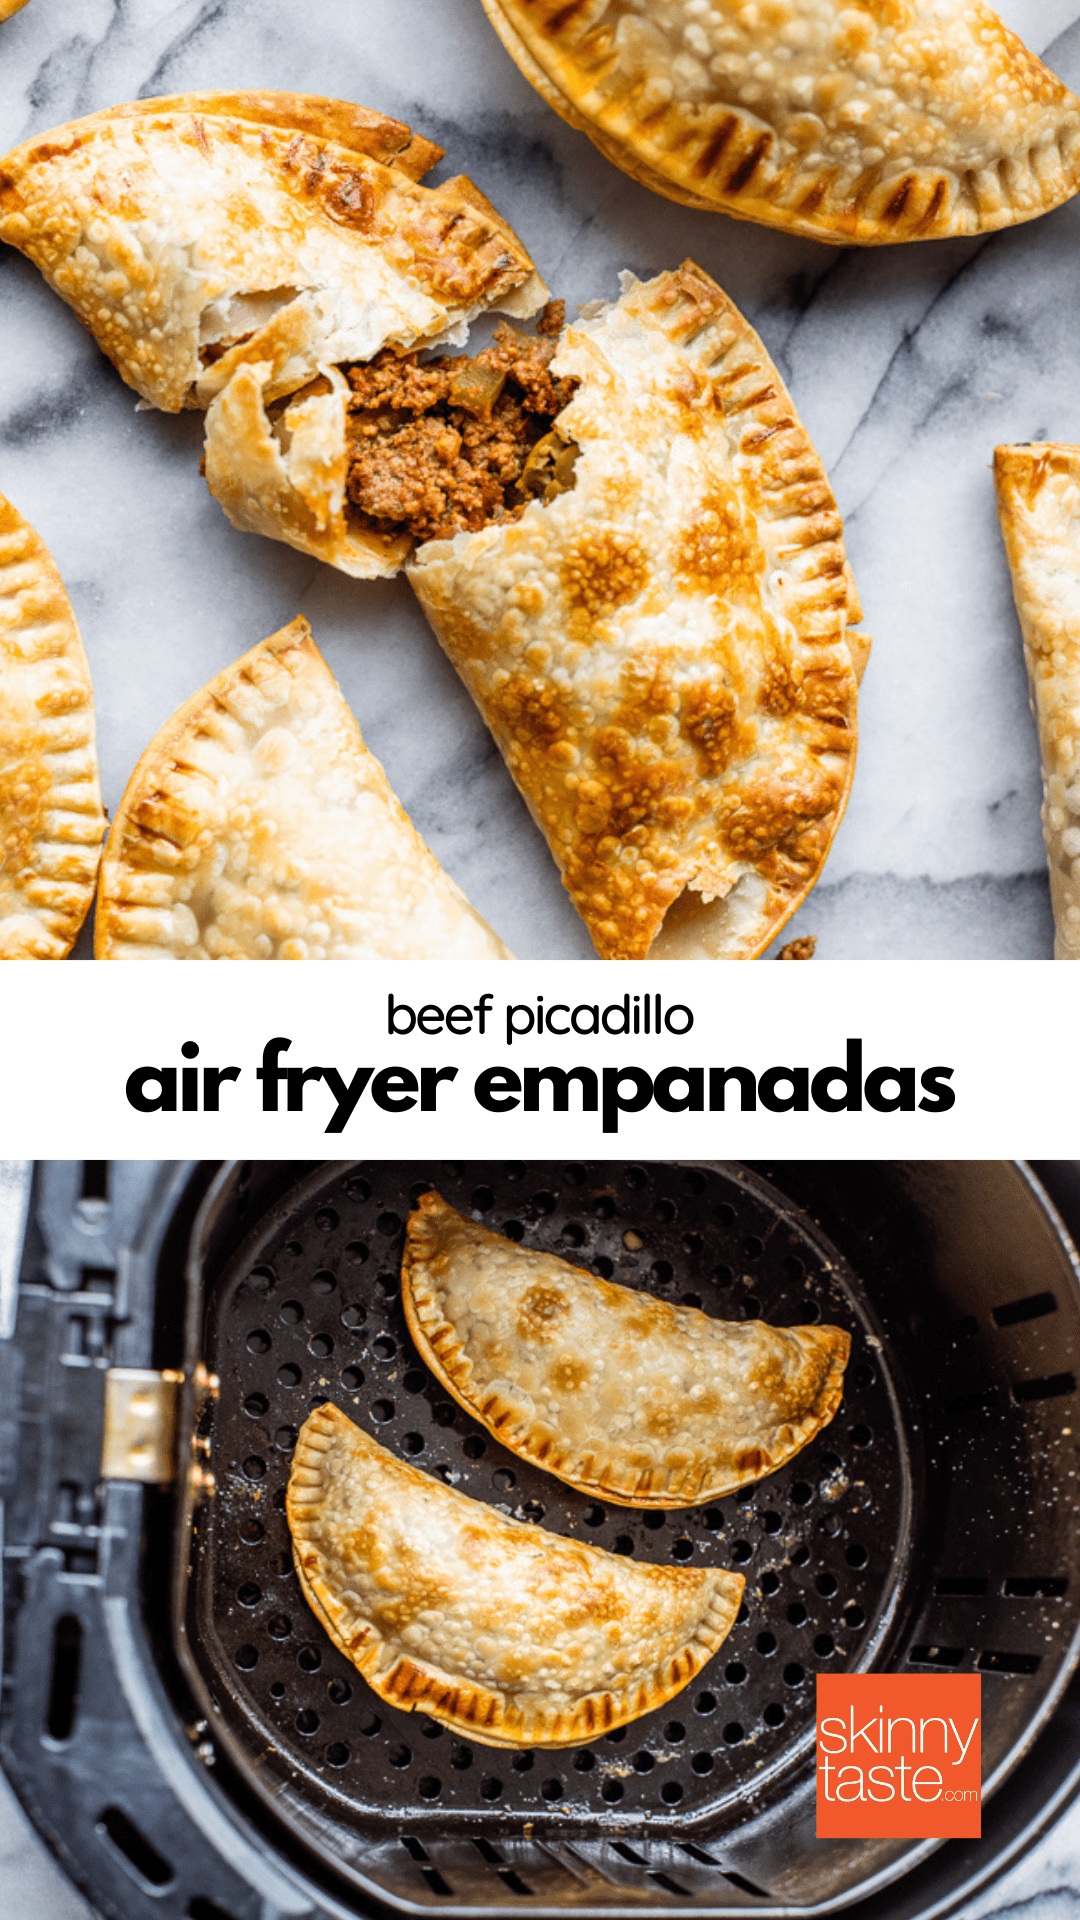 Air Fryer Empanadas